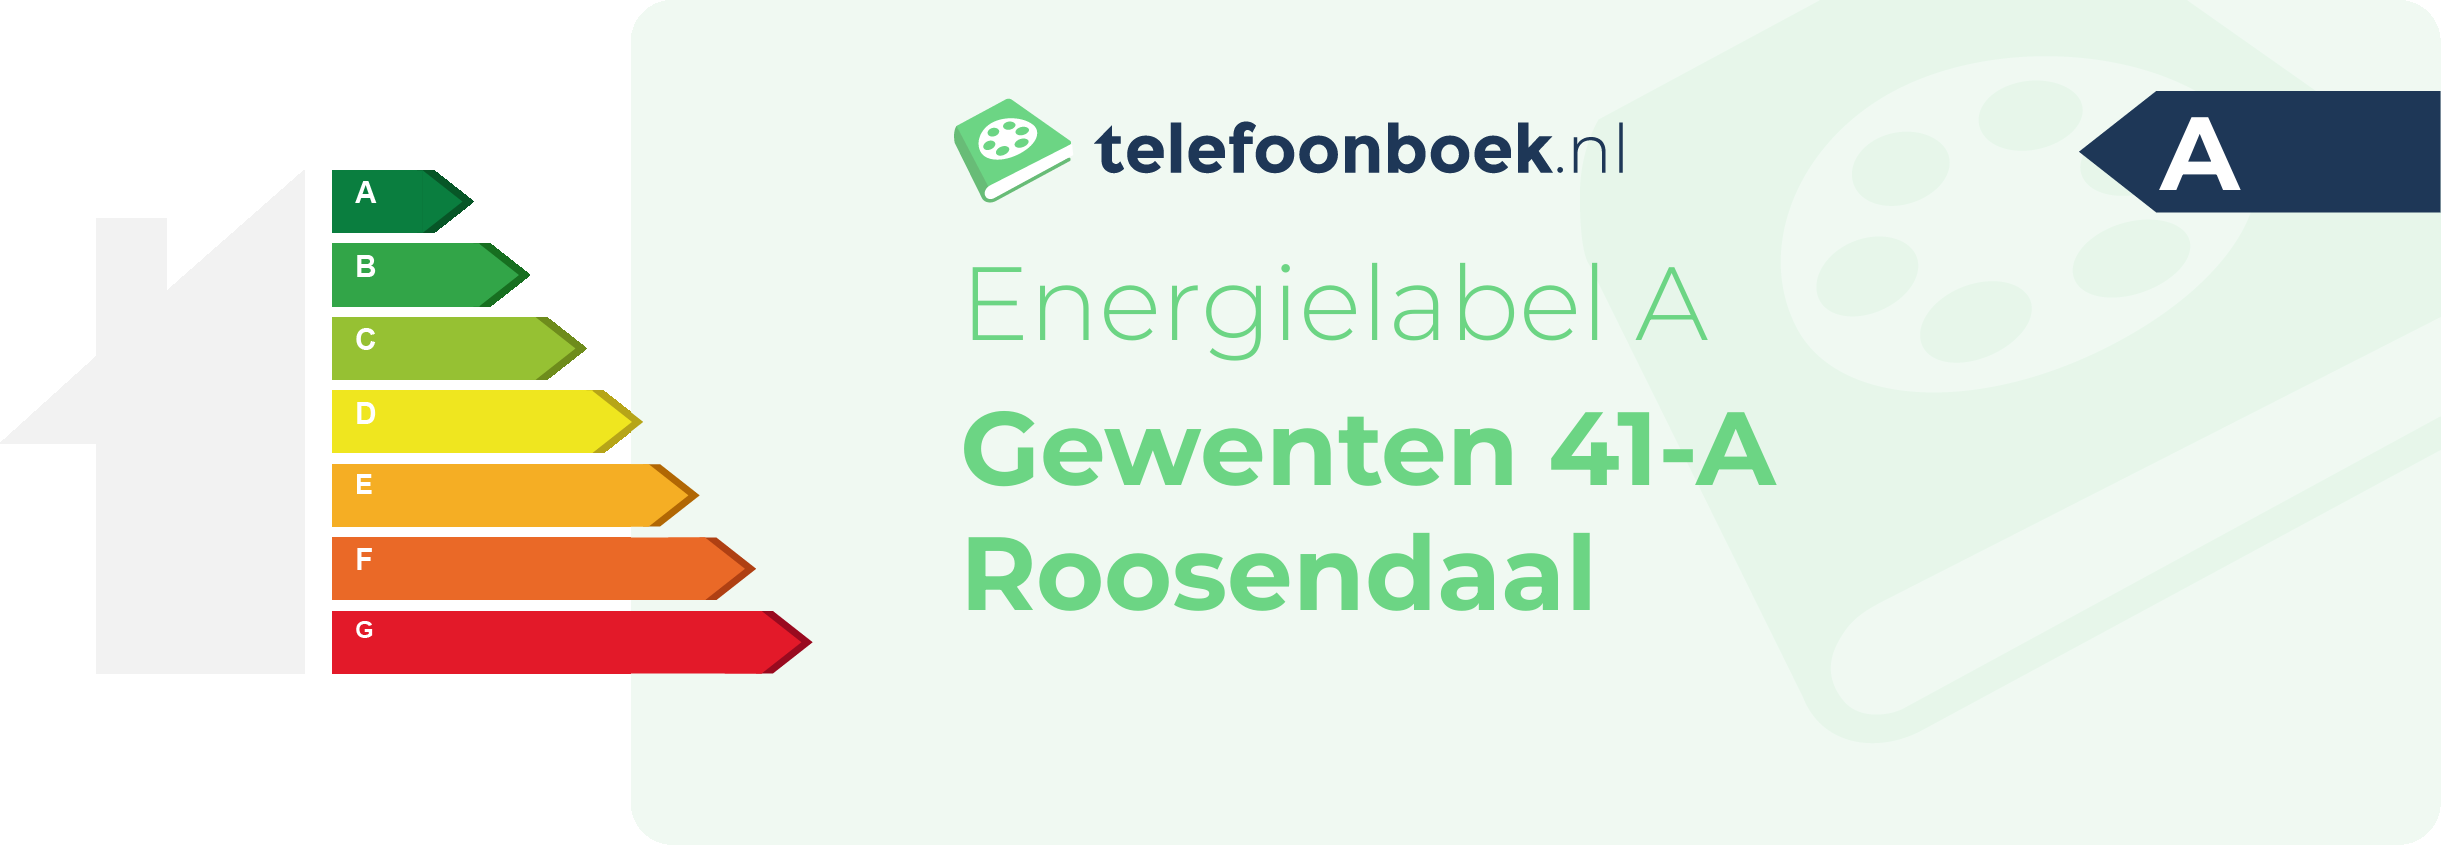 Energielabel Gewenten 41-A Roosendaal